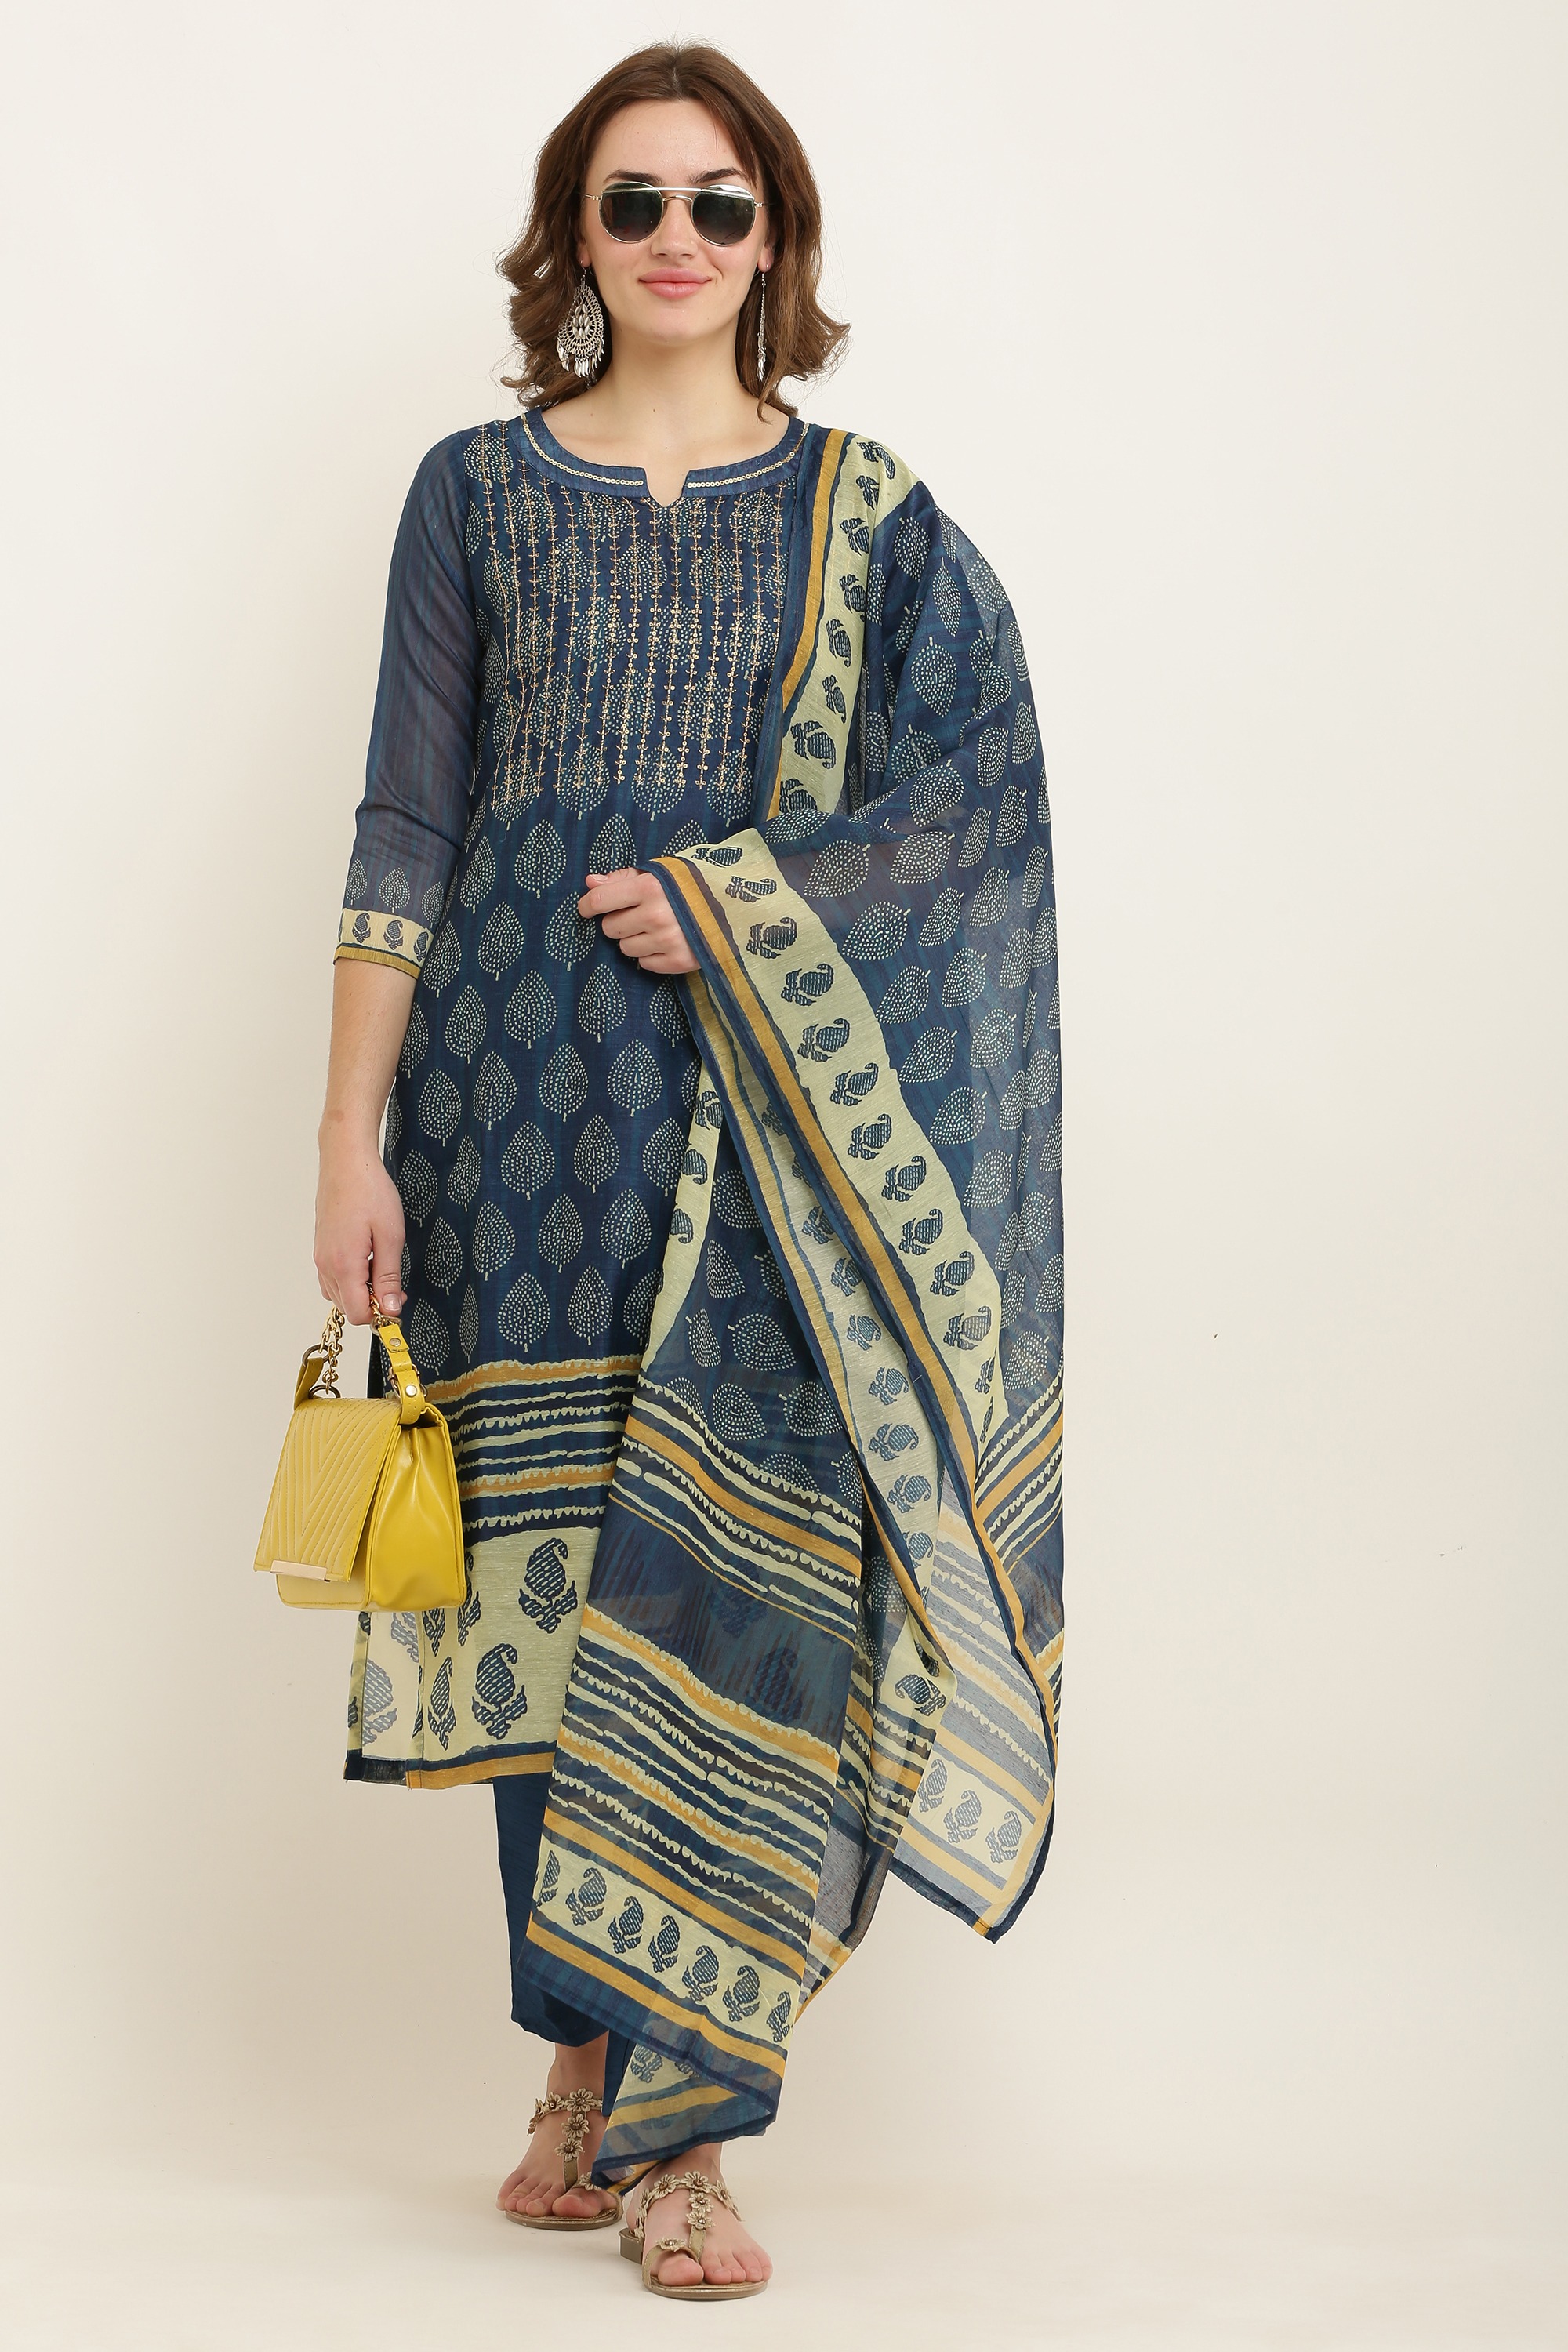 Kurti Pants With Dupatta - Shop online women fashion, indo-western, ethnic  wear, sari, suits, kurtis, watches, gifts.